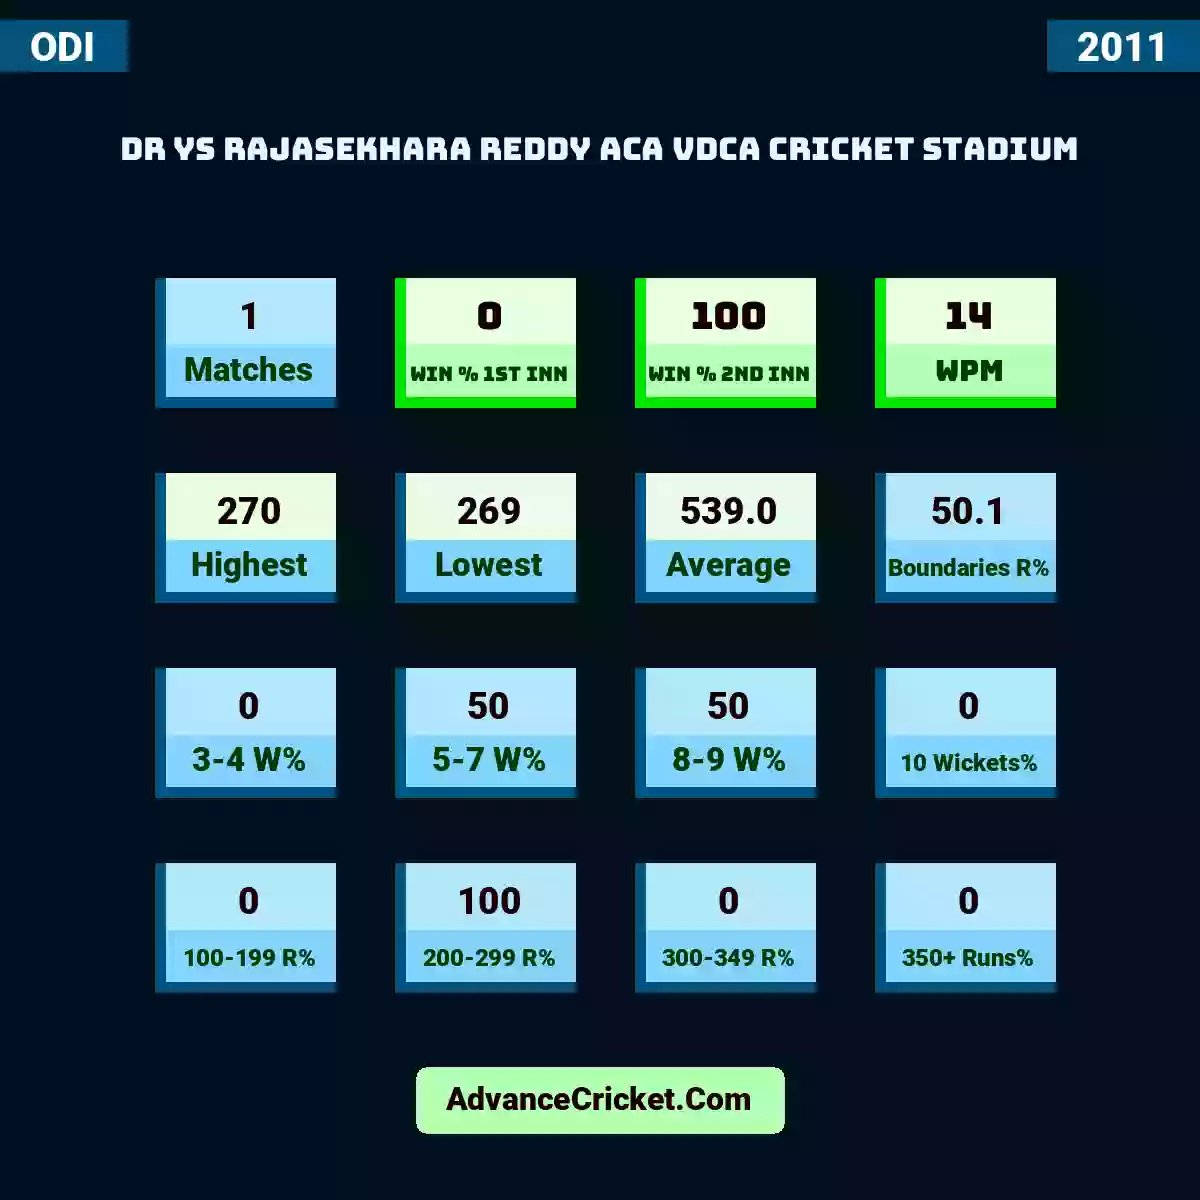 Image showing Dr YS Rajasekhara Reddy ACA VDCA Cricket Stadium with Matches: 1, Win % 1st Inn: 0, Win % 2nd Inn: 100, WPM: 14, Highest: 270, Lowest: 269, Average: 539.0, Boundaries R%: 50.1, 3-4 W%: 0, 5-7 W%: 50, 8-9 W%: 50, 10 Wickets%: 0, 100-199 R%: 0, 200-299 R%: 100, 300-349 R%: 0, 350+ Runs%: